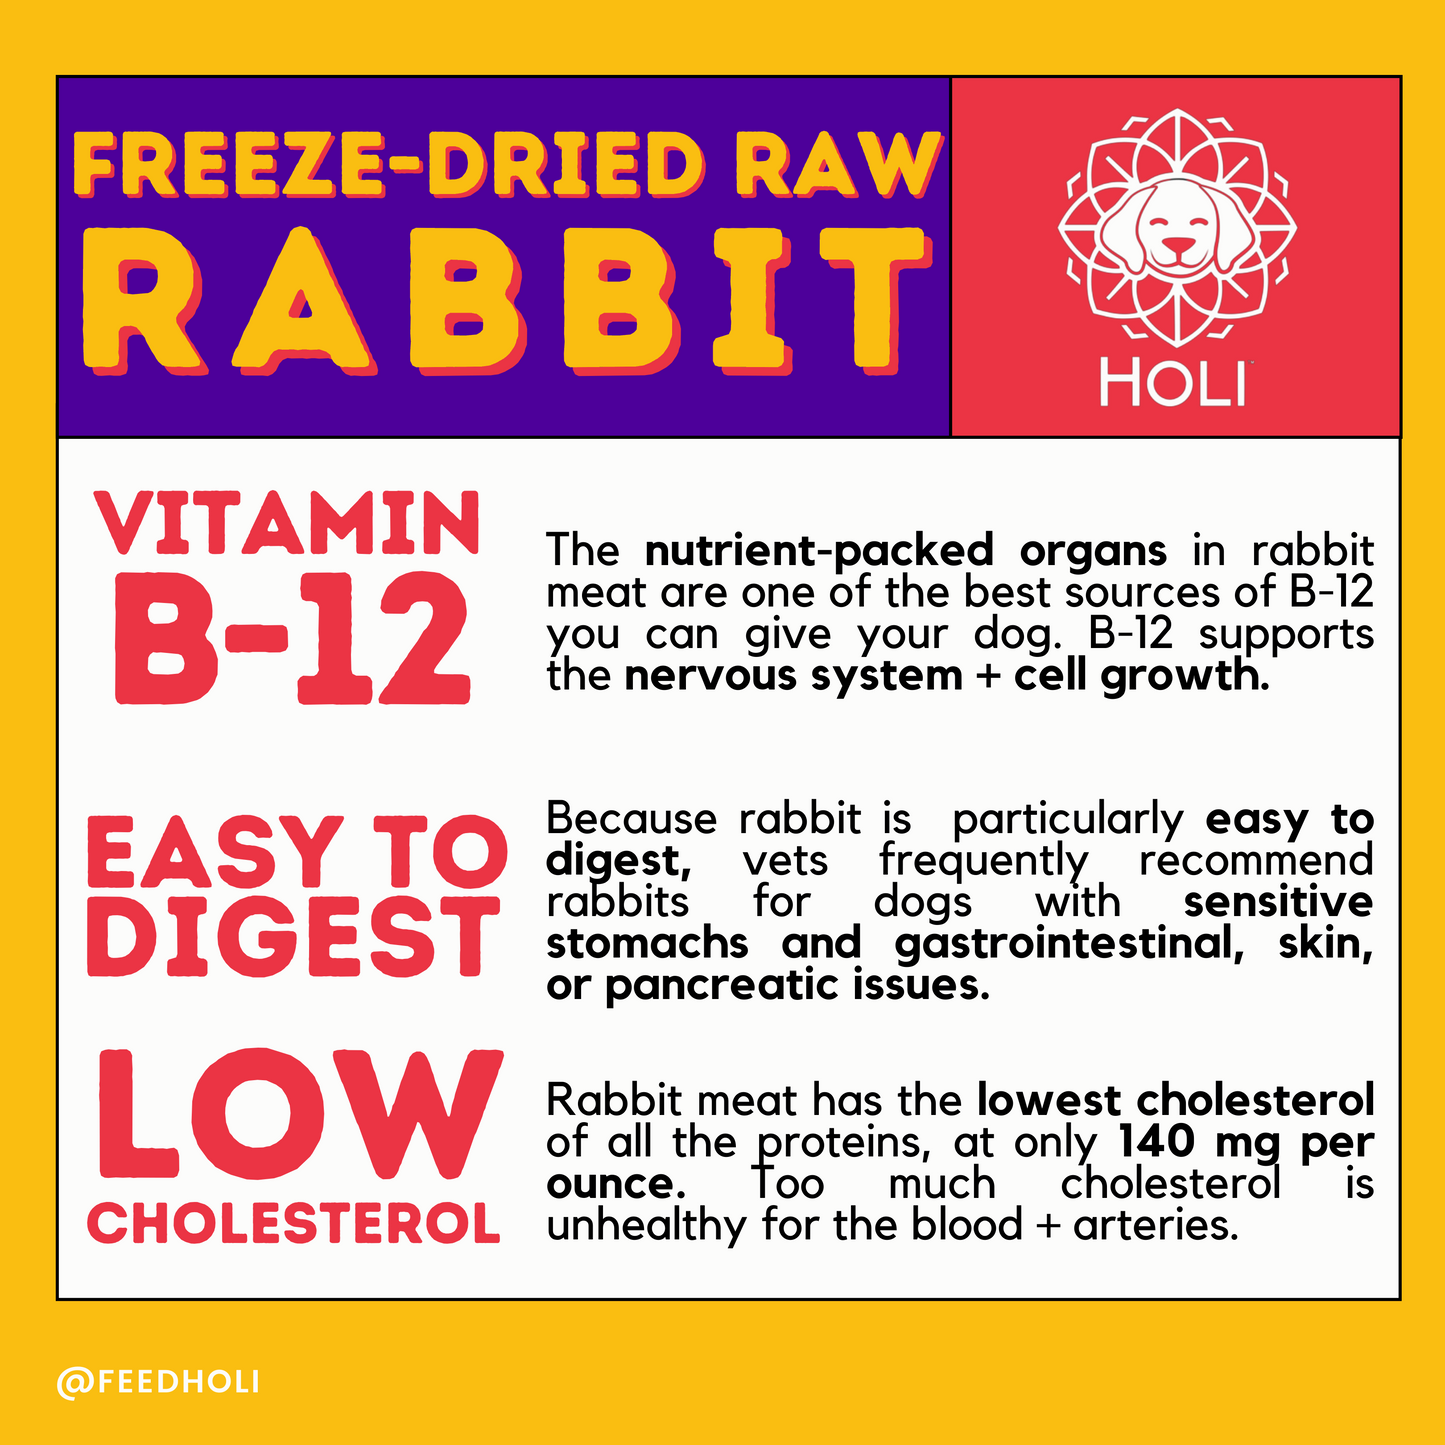 Benefits of freeze dried raw rabbit treats infographic